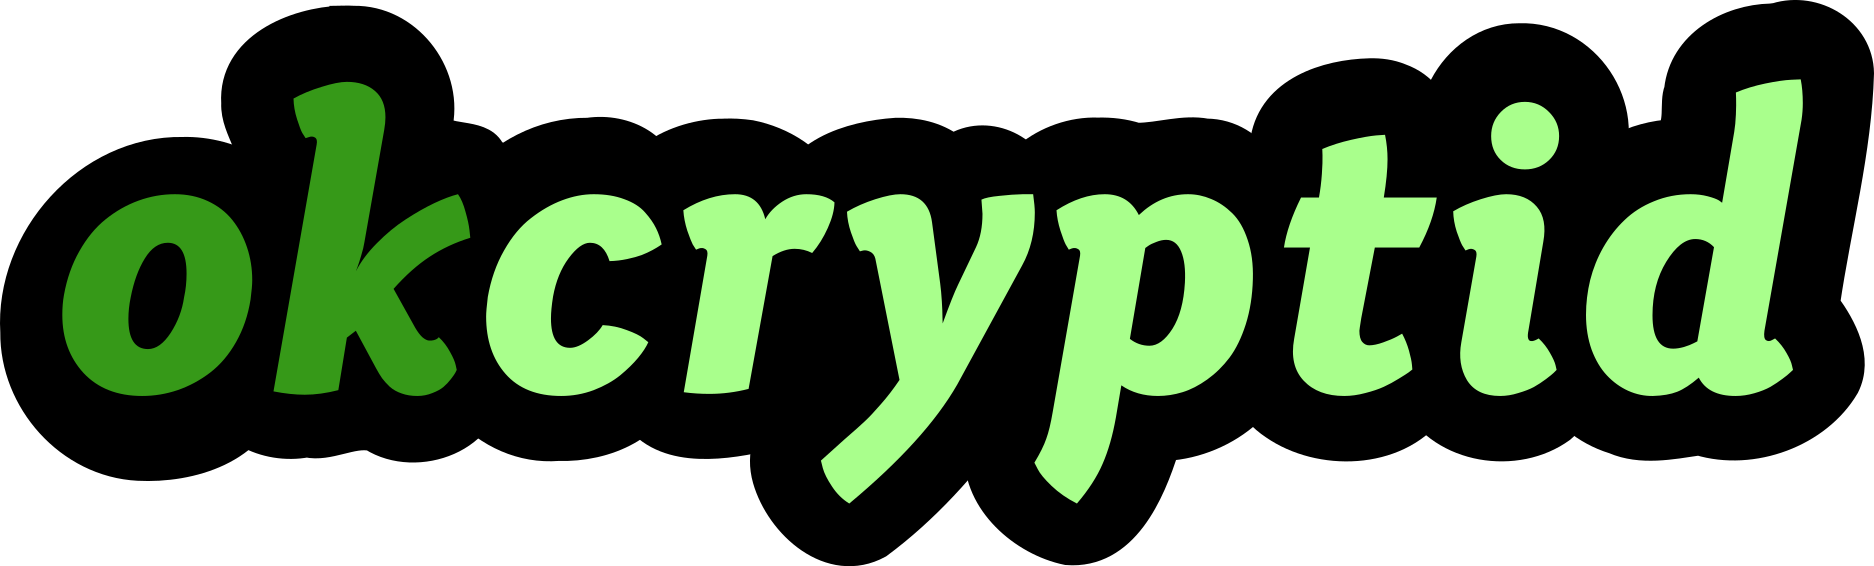 okcryptid